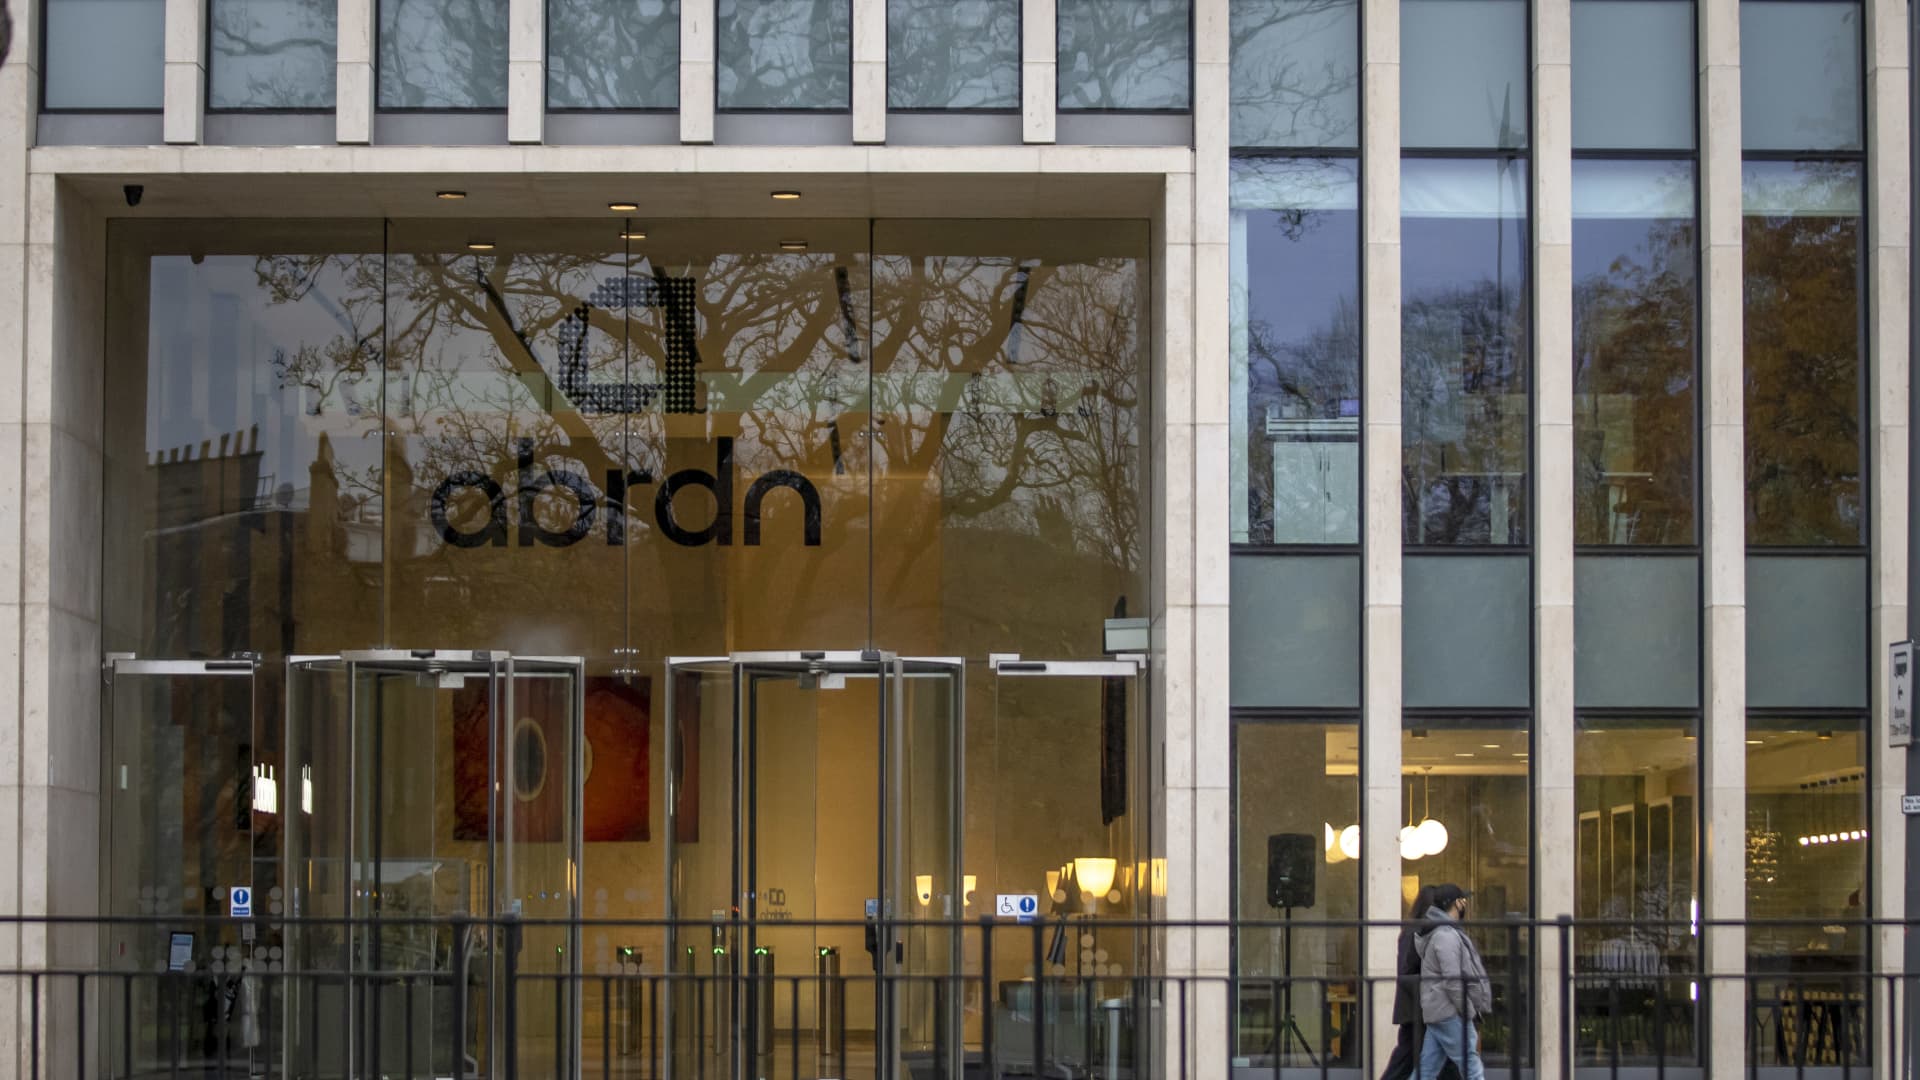 Abrdn CIO slams jabs at company's rebranded name